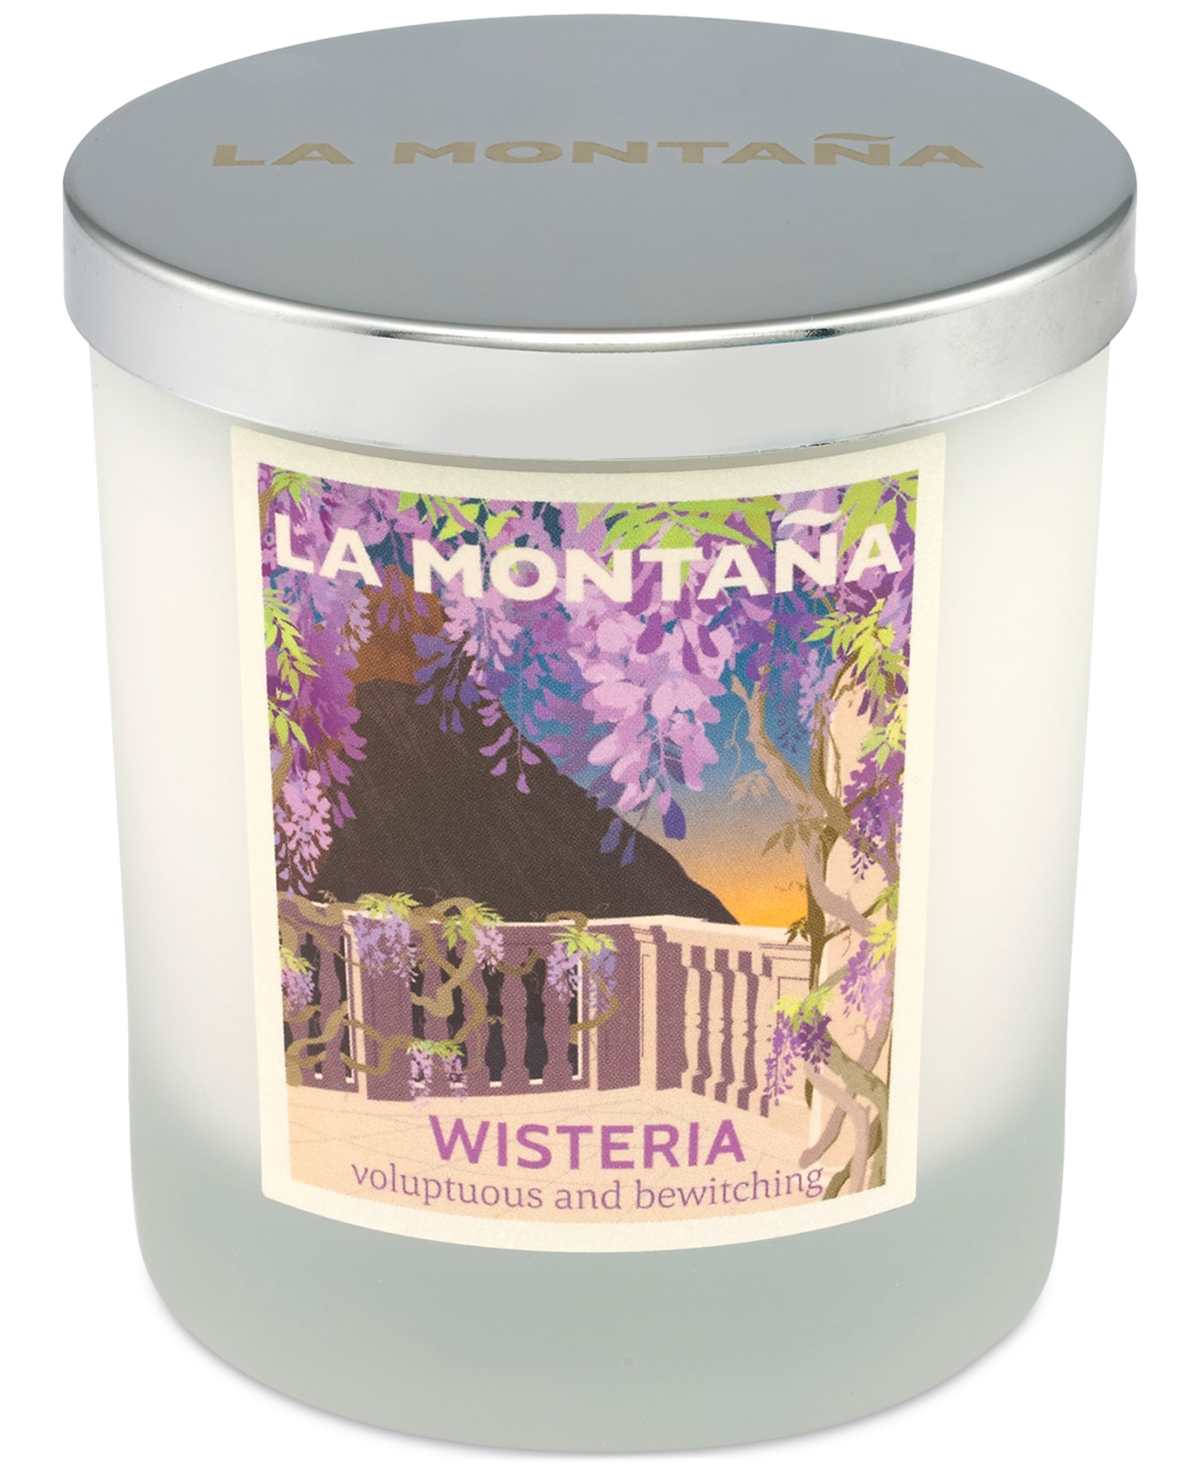 La Montana Wisteria Scented Candle, 8 oz.